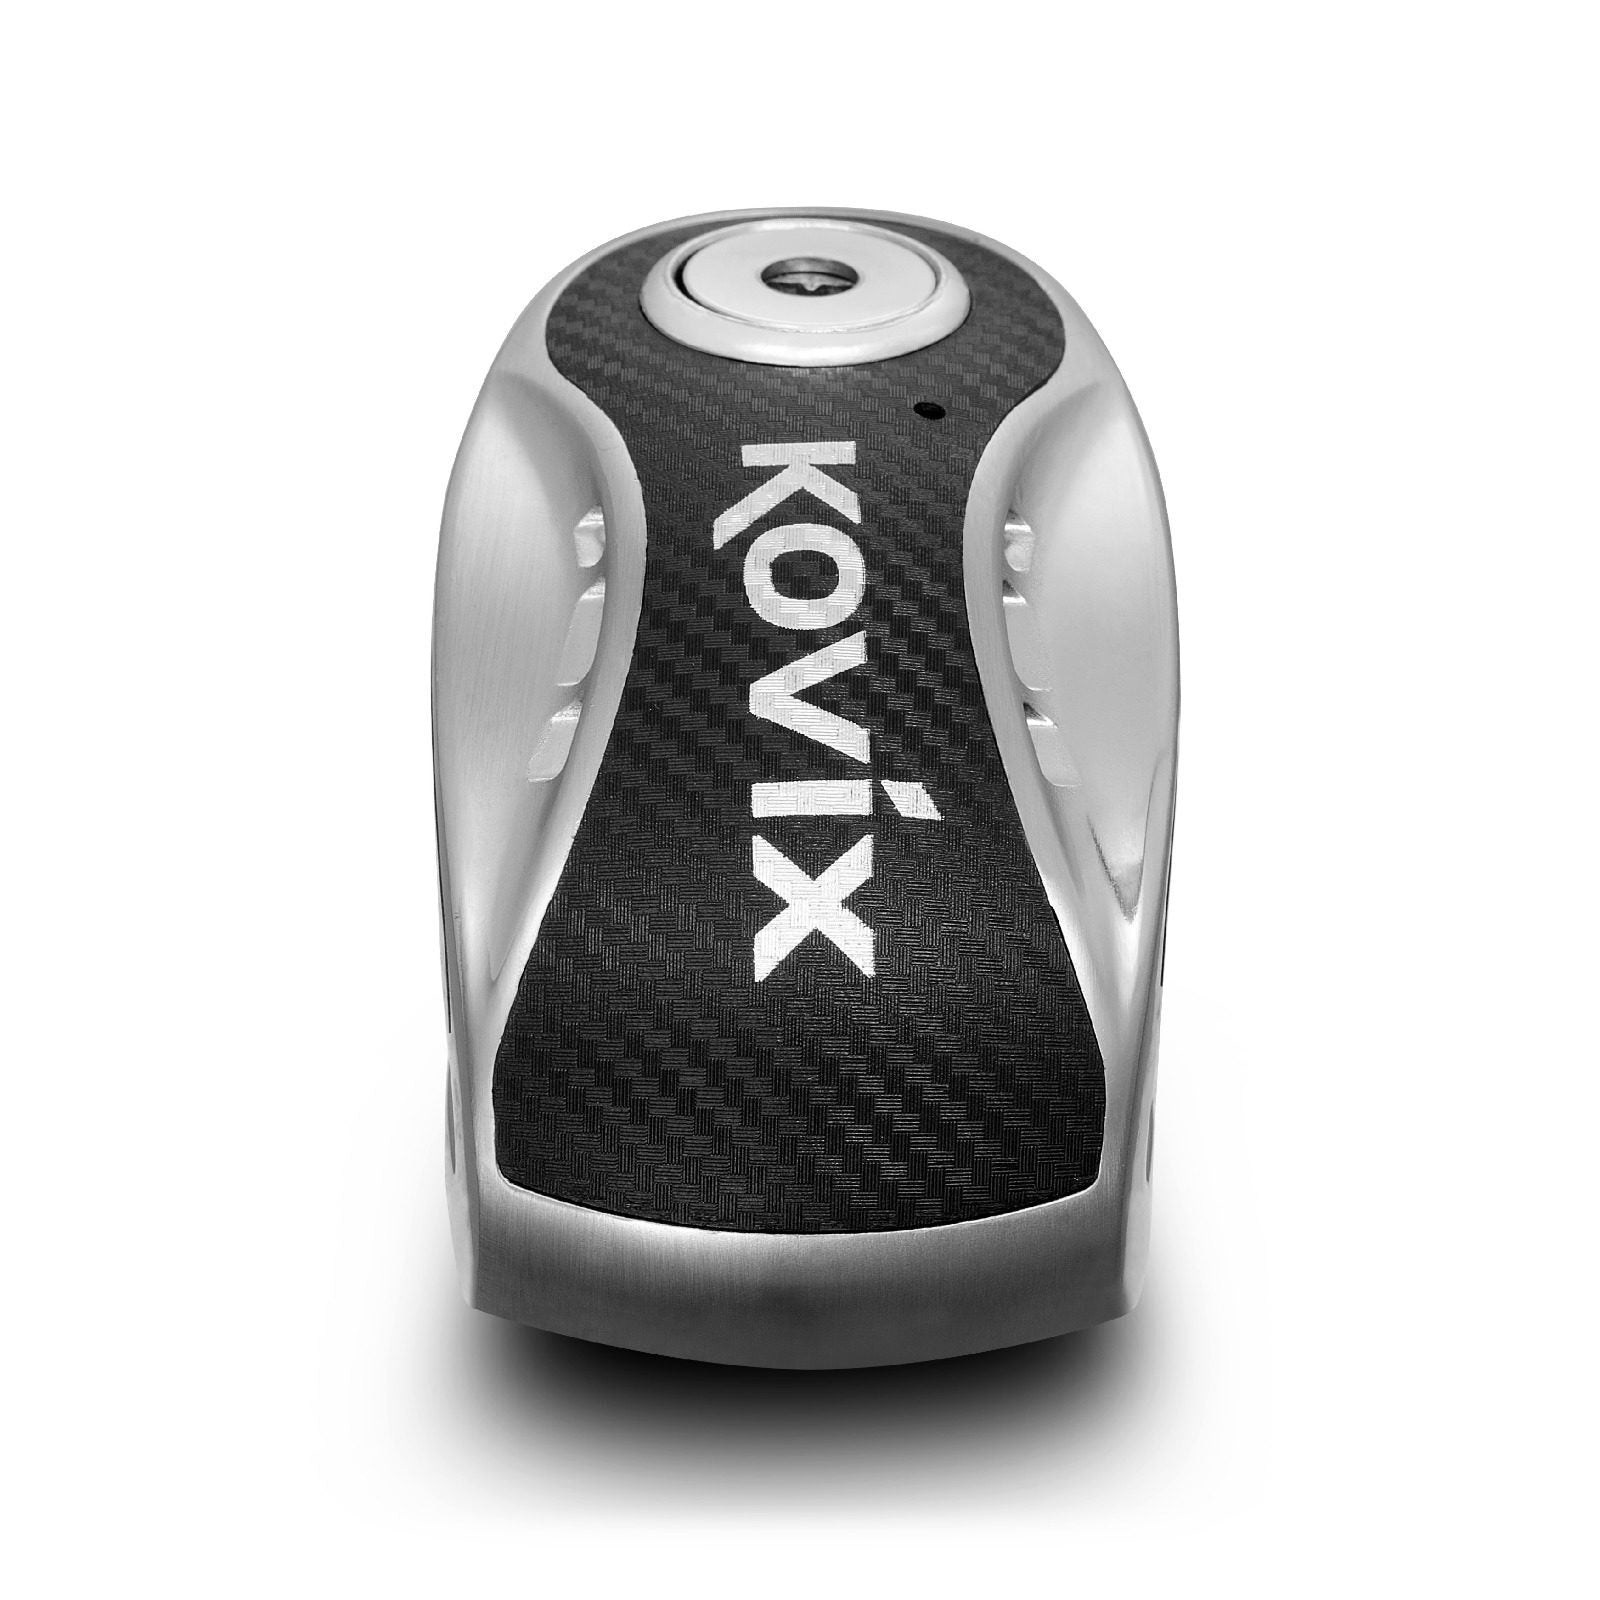 Kovix Alarmed Disc Lock Model Number KD6 6mm Pin Size - Black